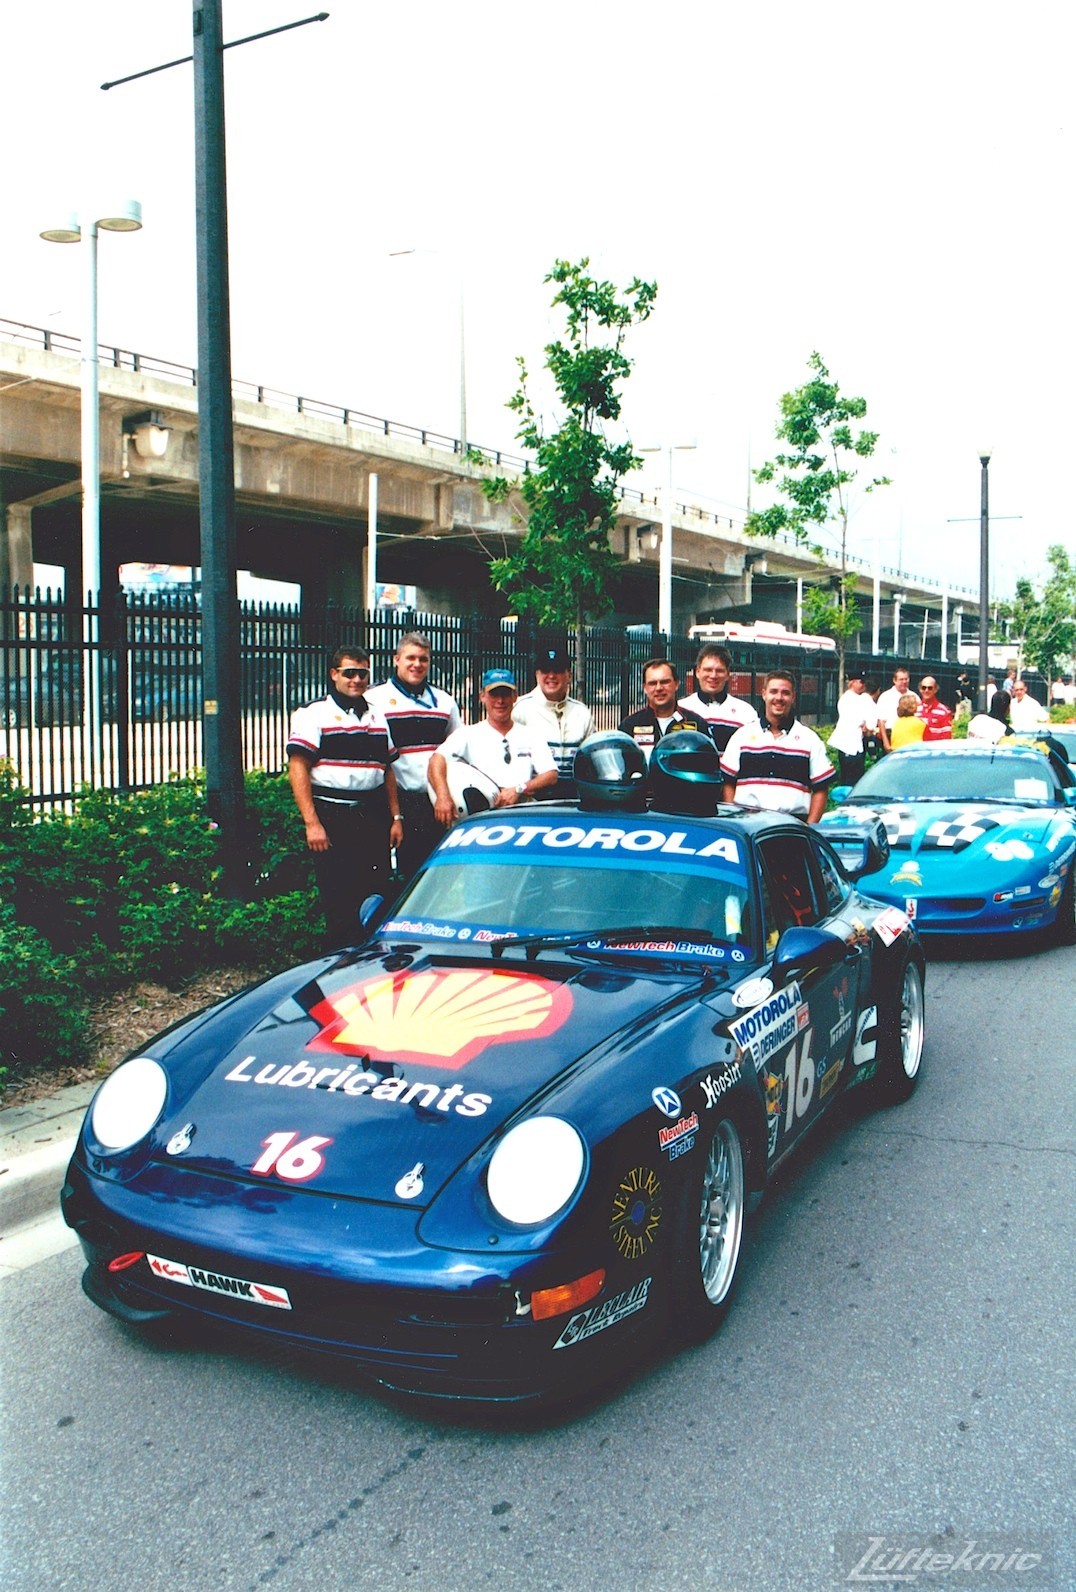 Motorola Cup Champions 1999